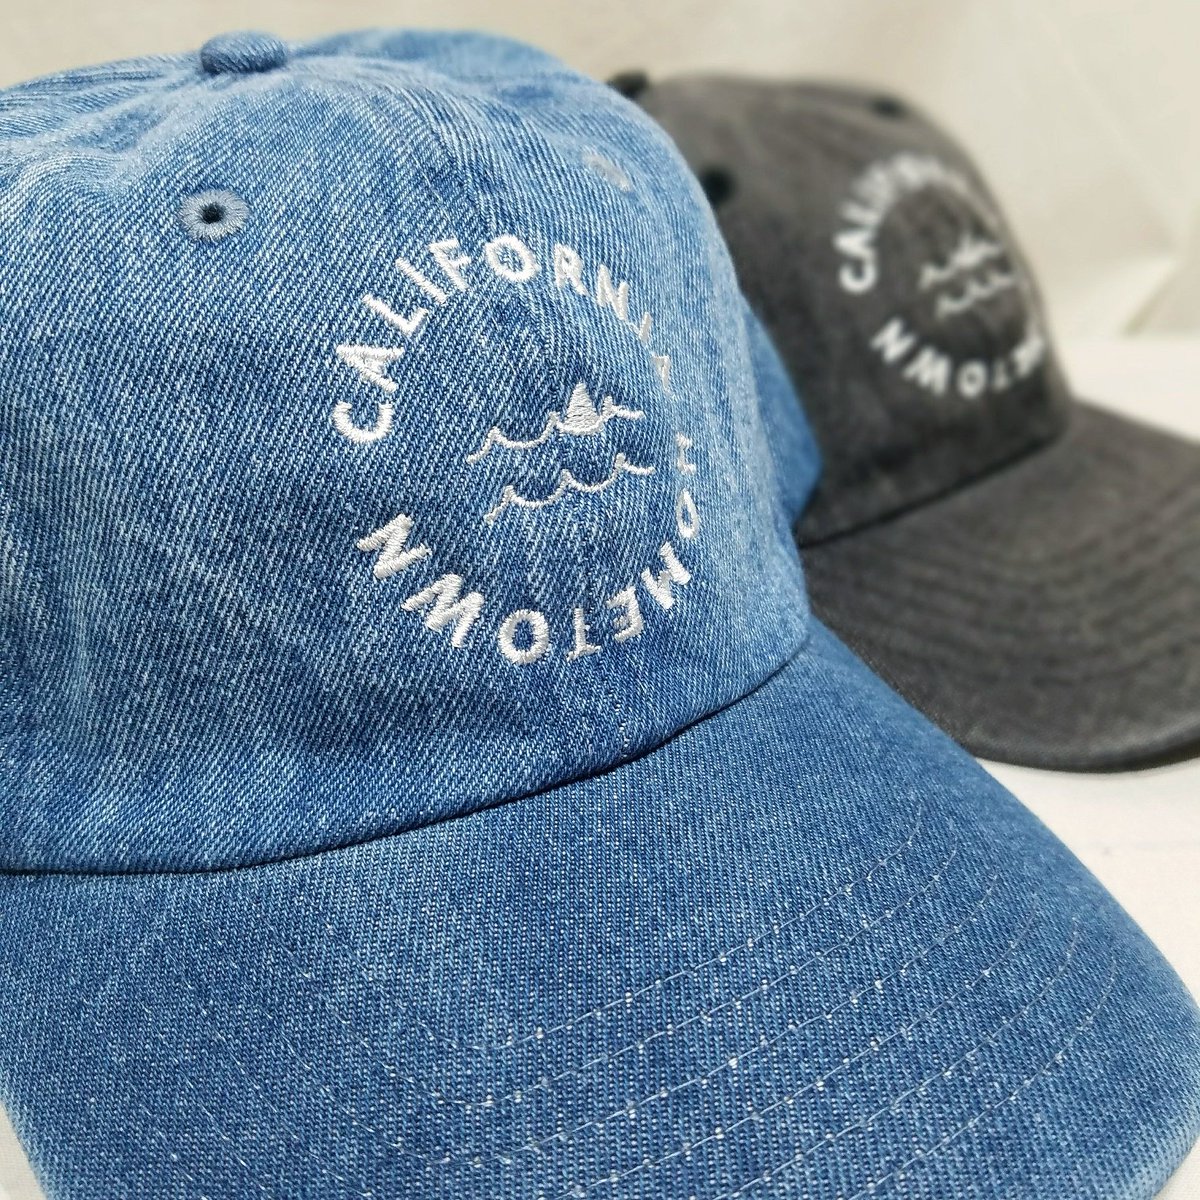 Blueism Official Sur Twitter Blueism Cal Hometown Denimcap 4 570円 ニューヨークを拠点にしている帽子メーカーのデニムキャップを採用 デニムキャップ デニム キャップ 帽子 通販 西海岸 サーフ アメカジ ロゴ ファッション ブランド Line